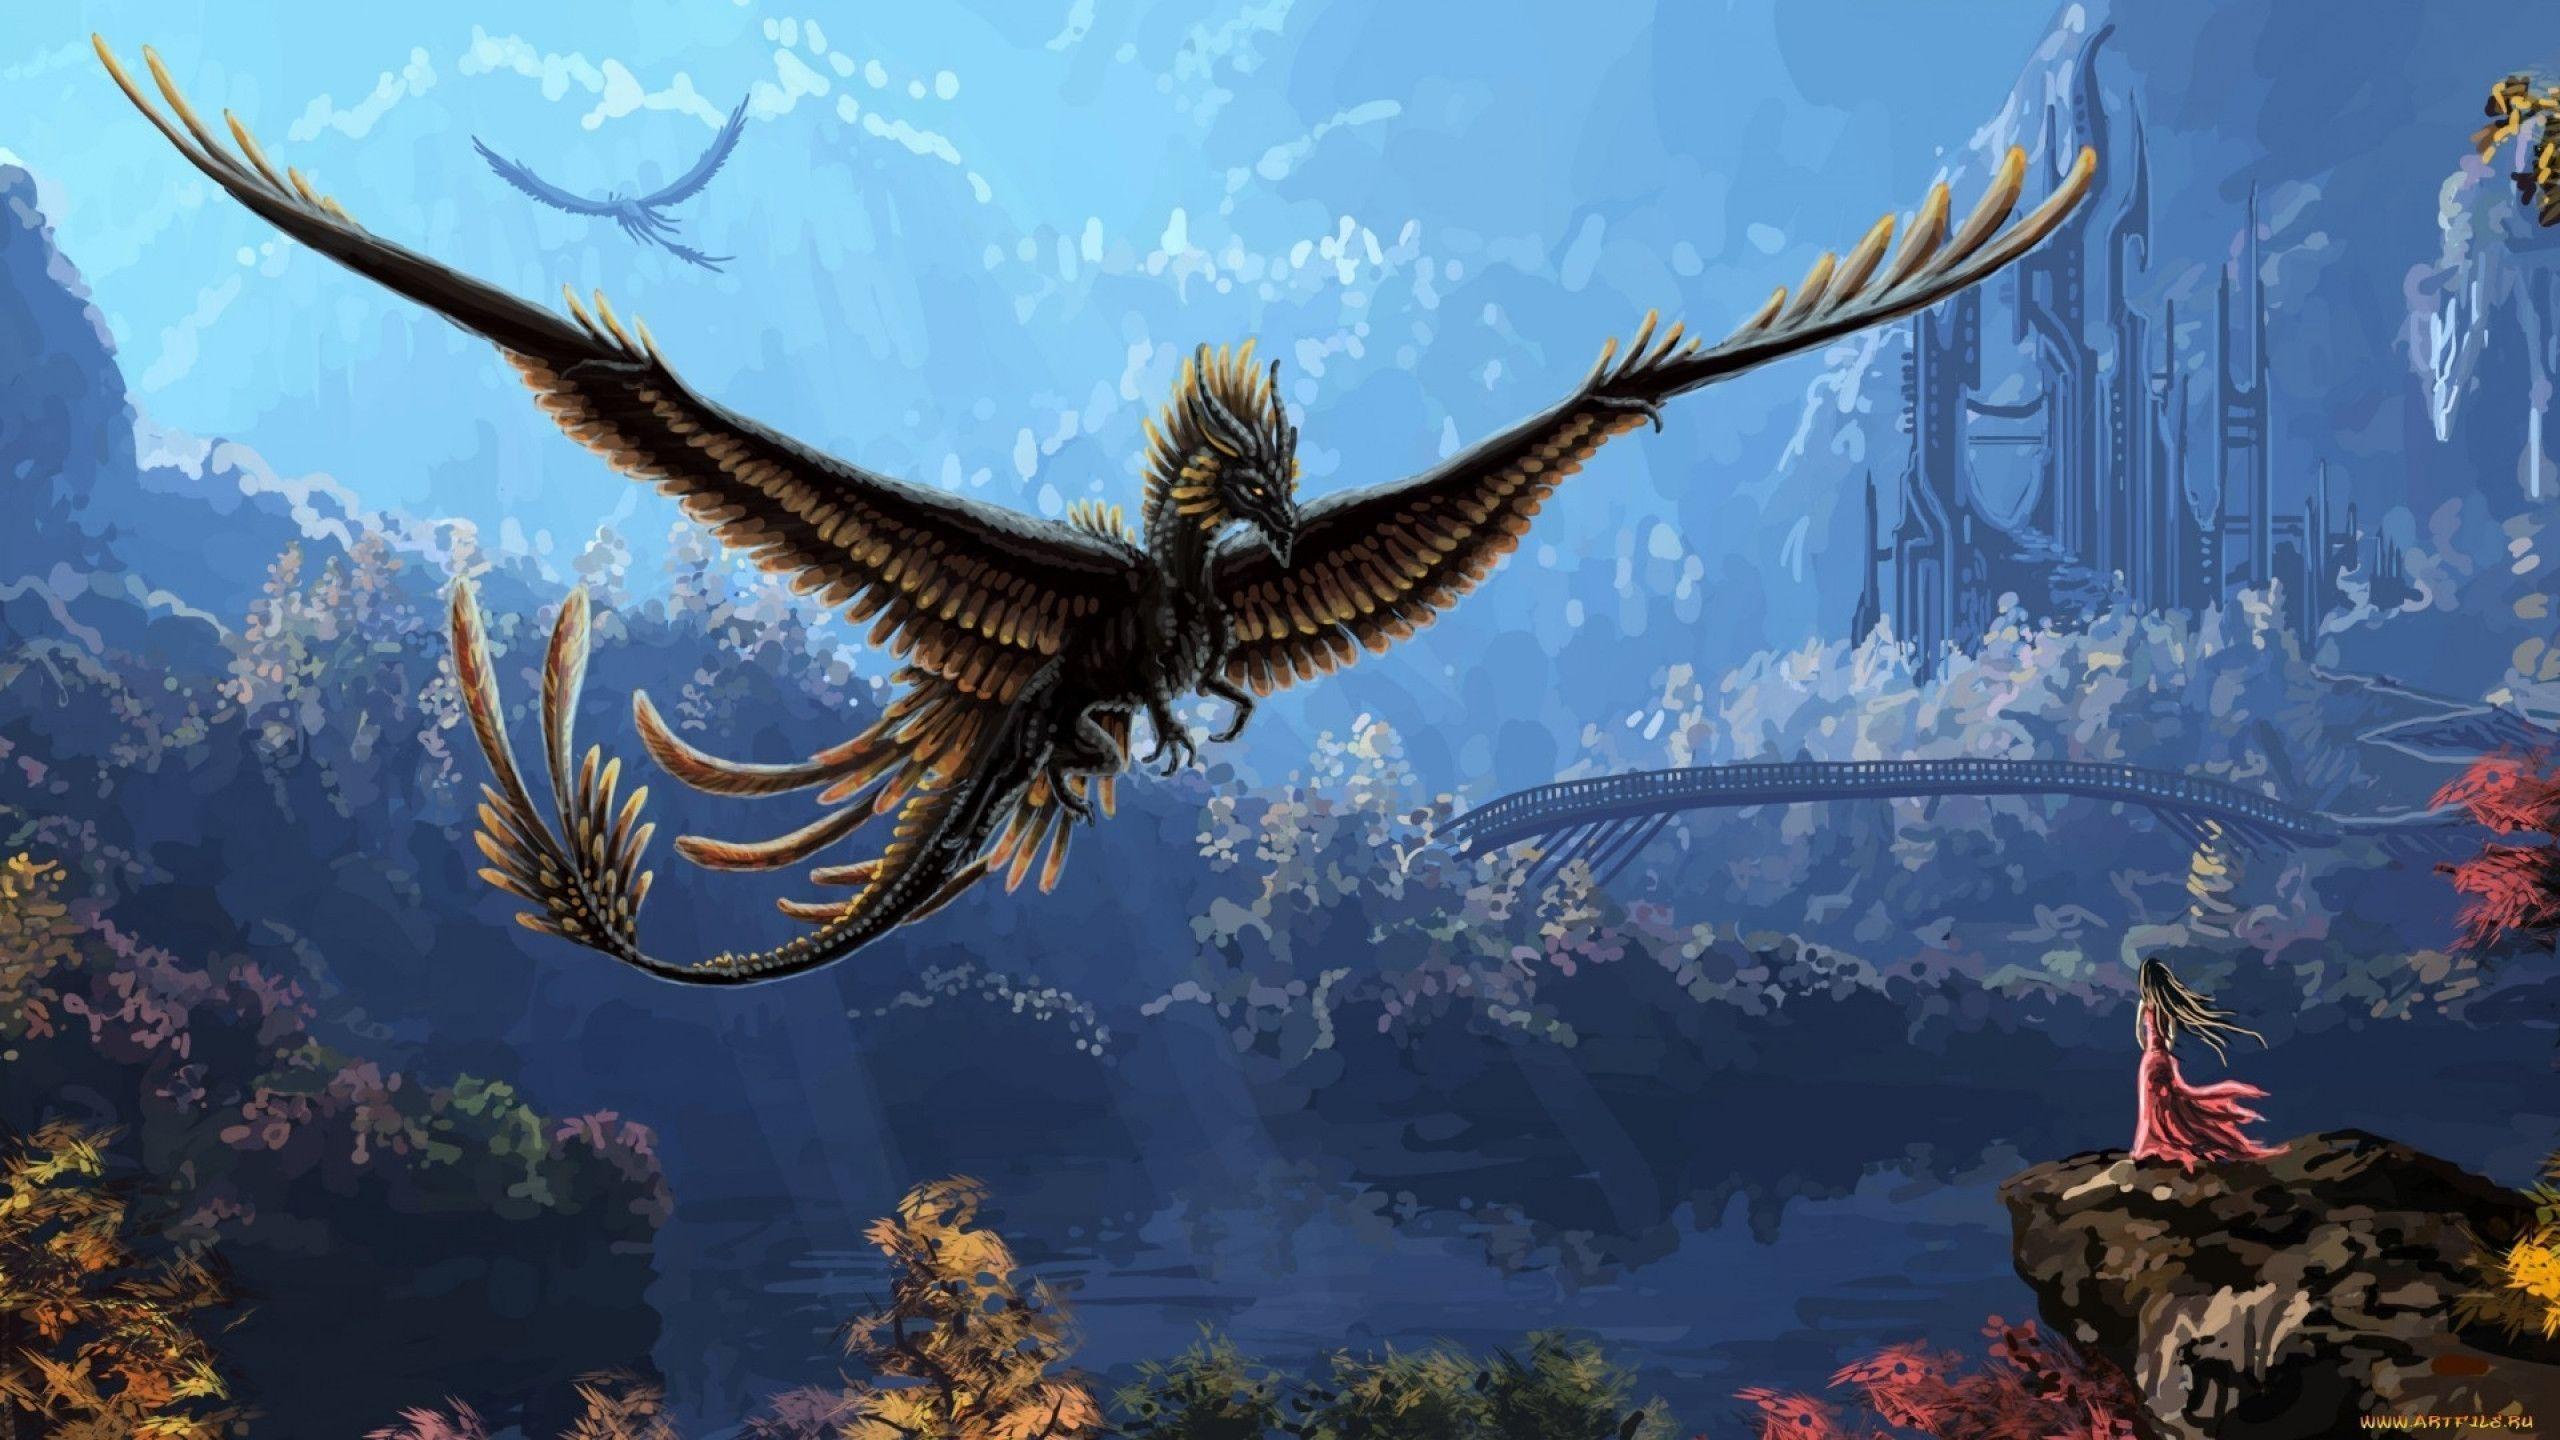 Dreamy Fantasy Flying Dragon Creative Artwork Wallpaper